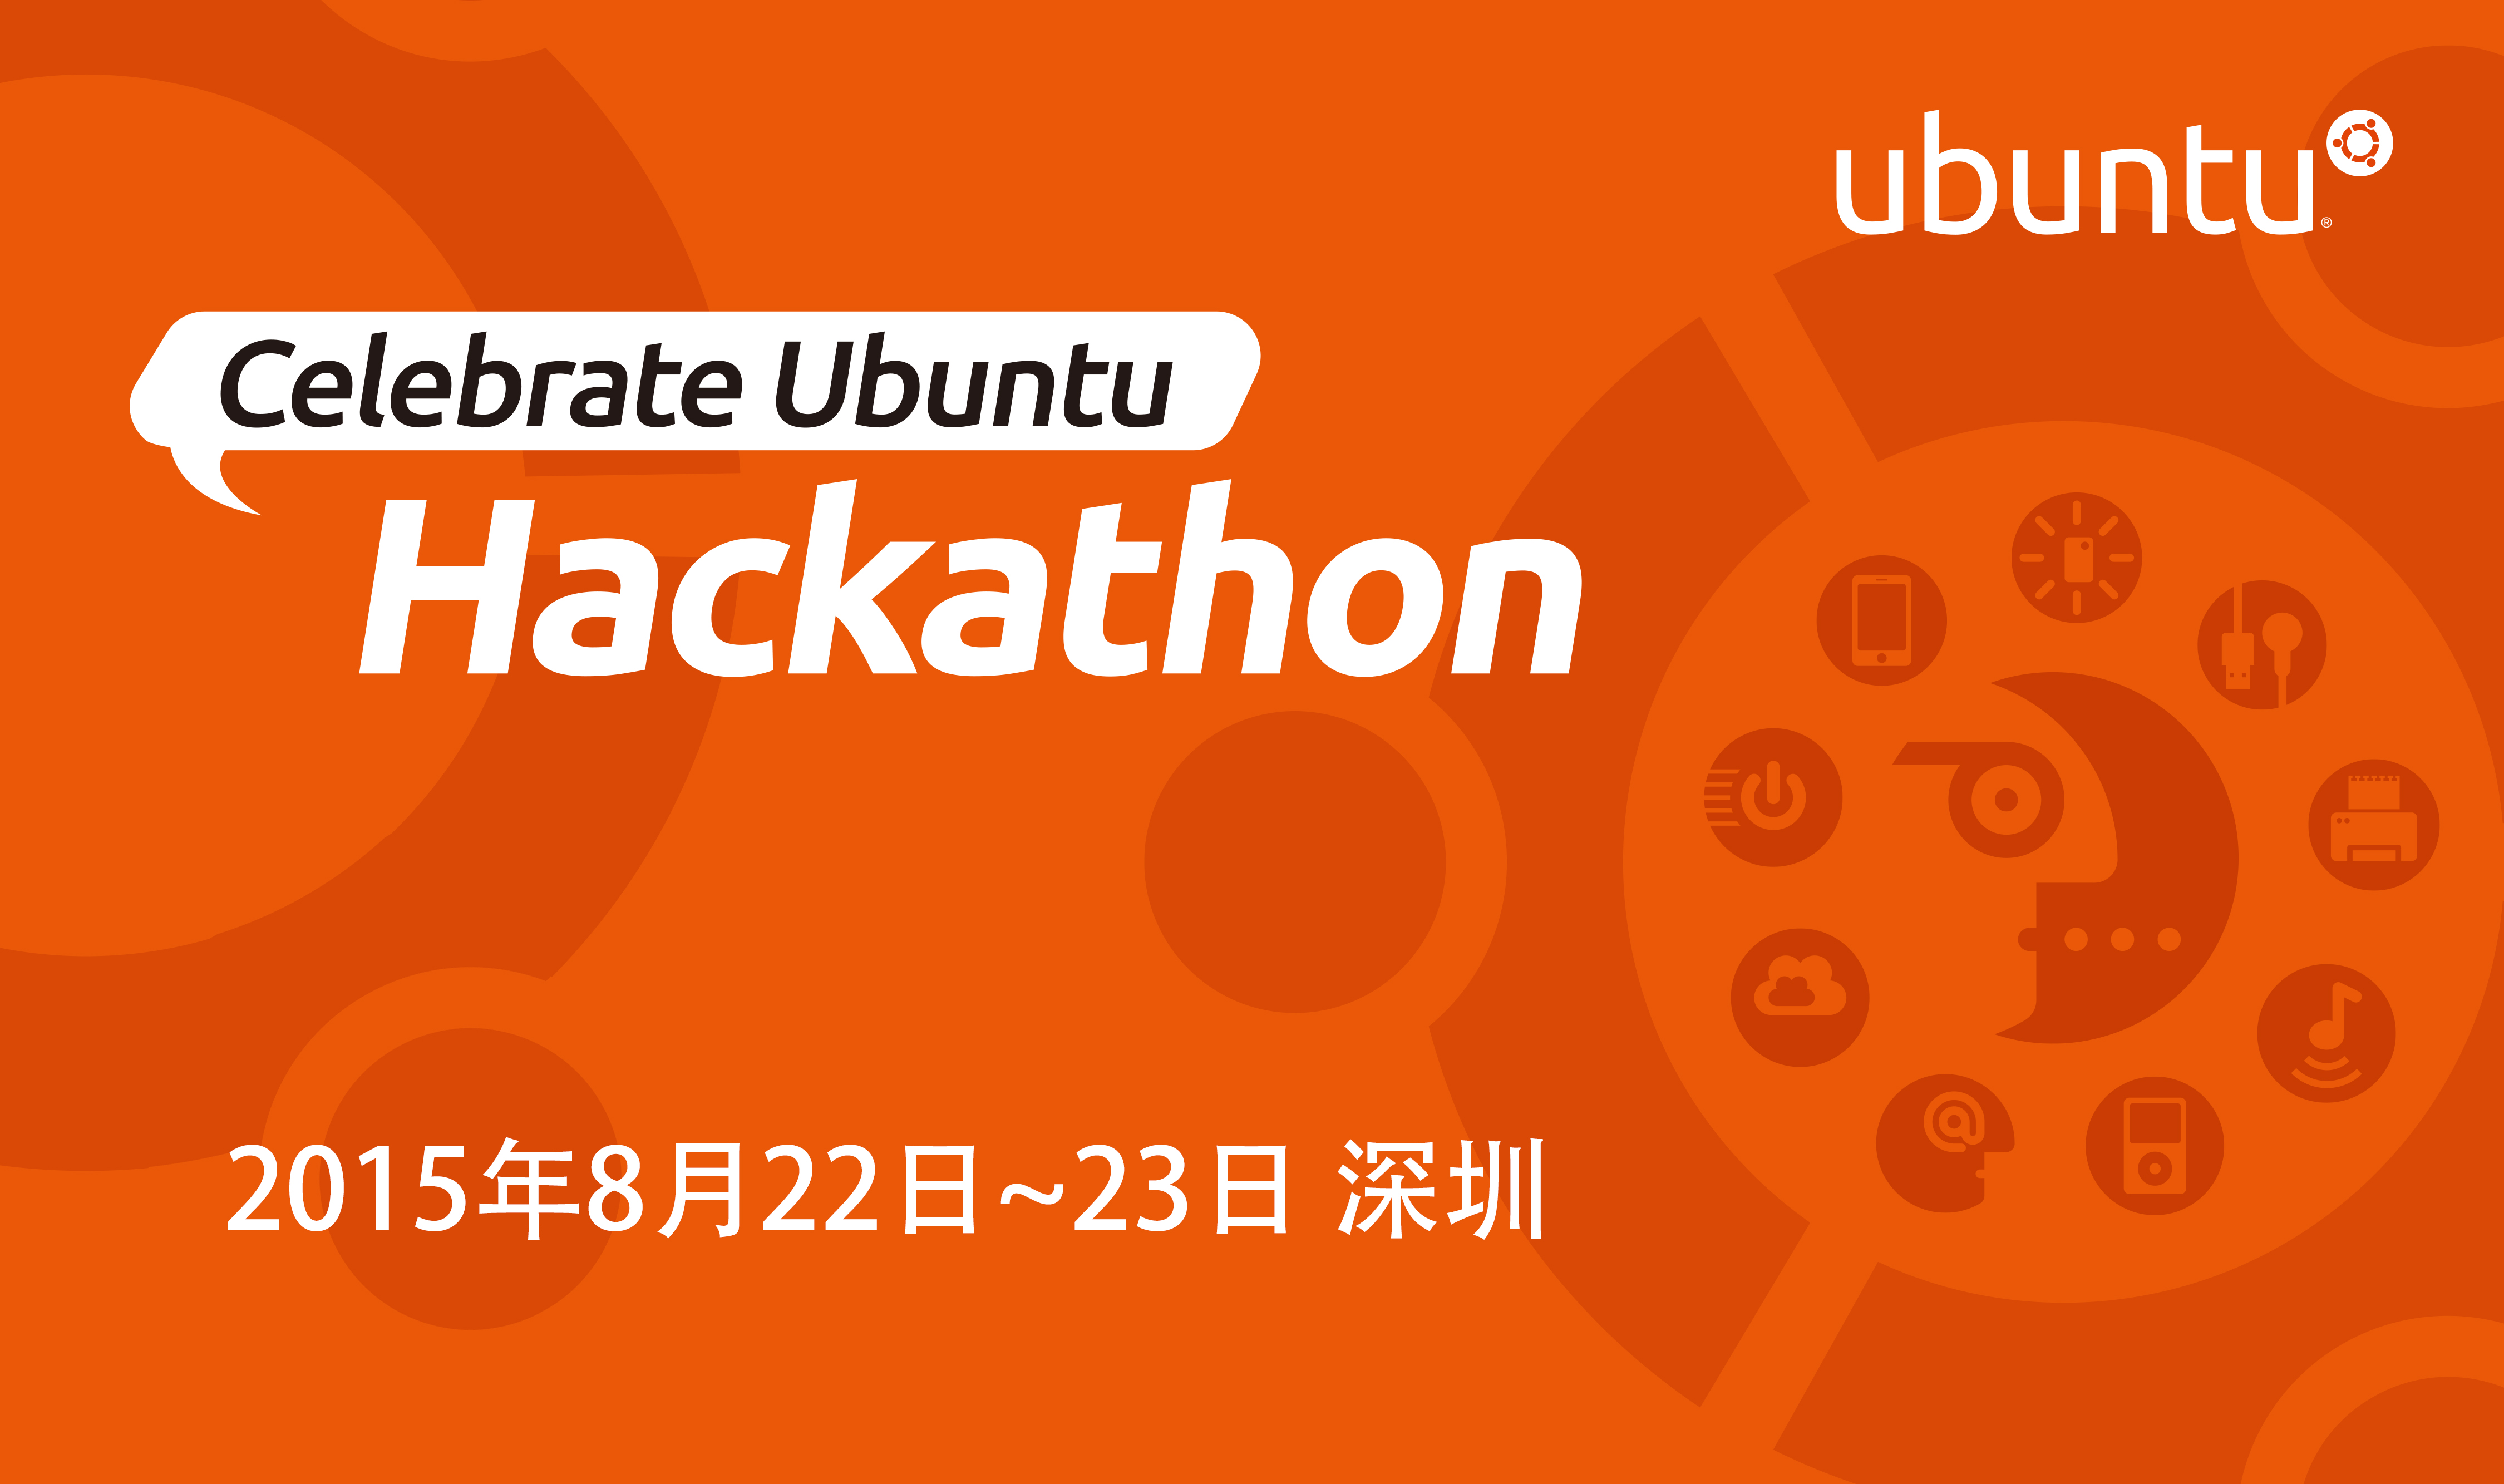 Ubuntu Hackathon - 深圳站